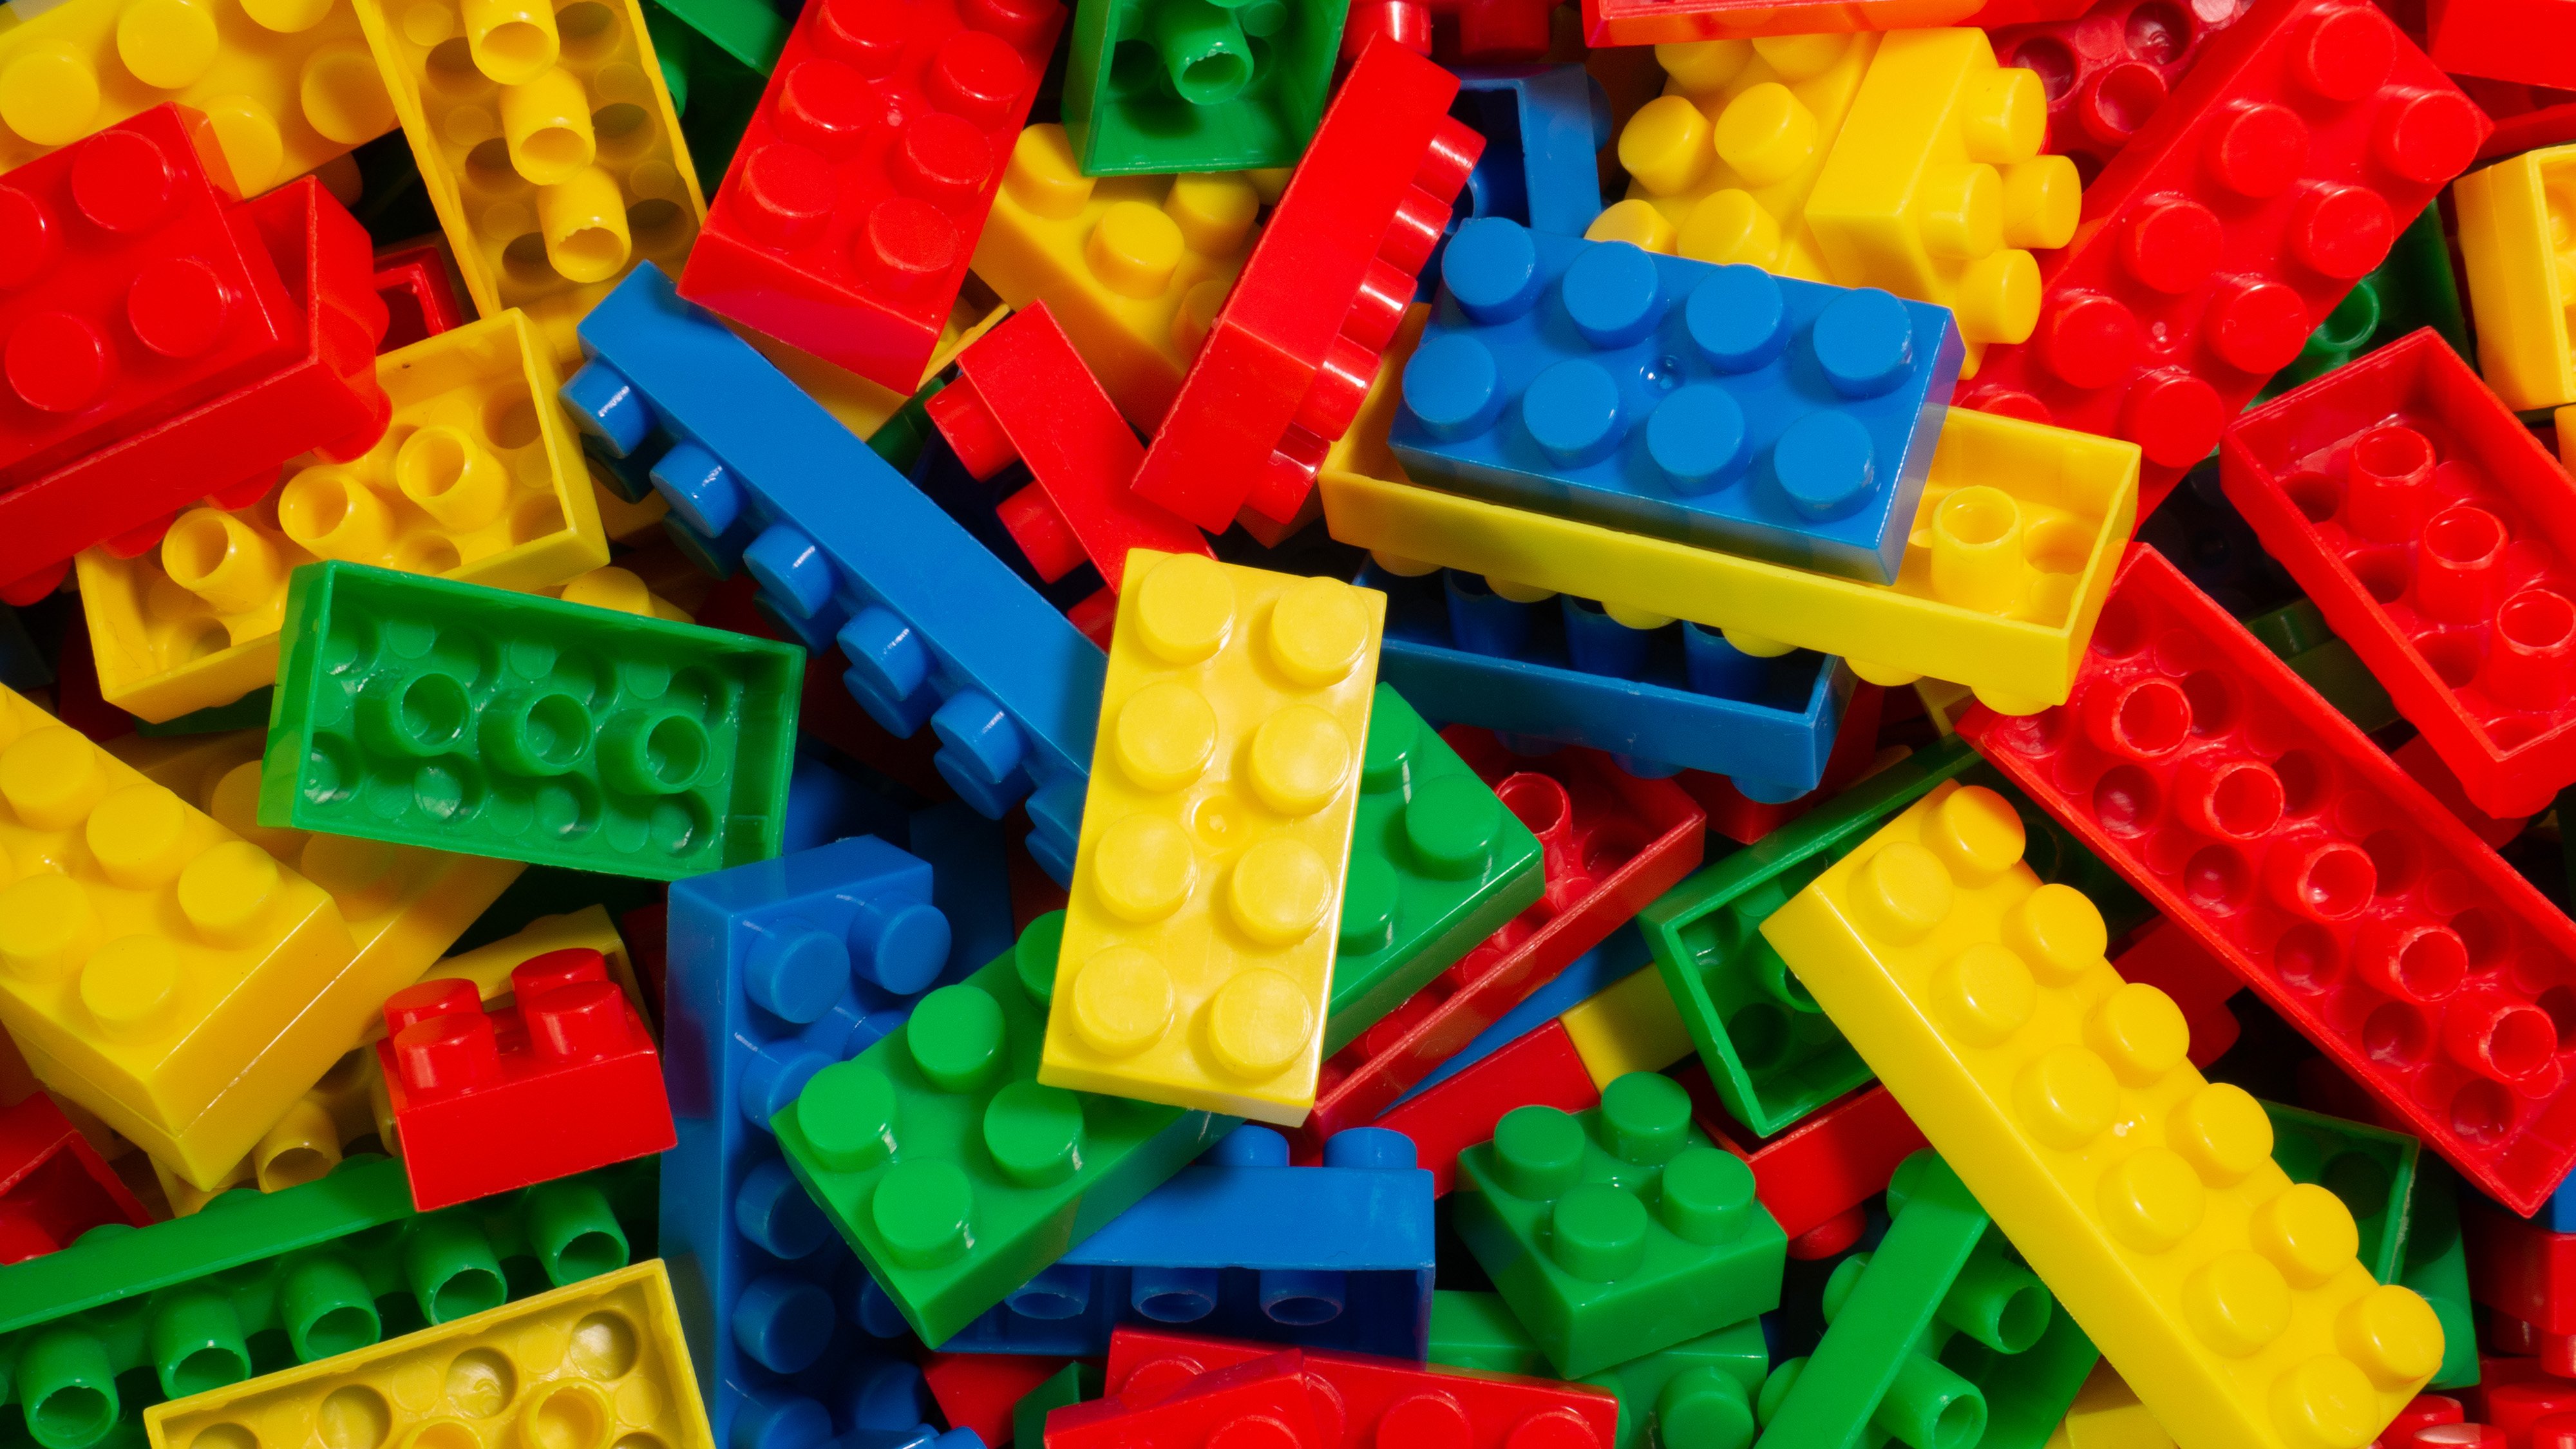 Lego building blocks build toy